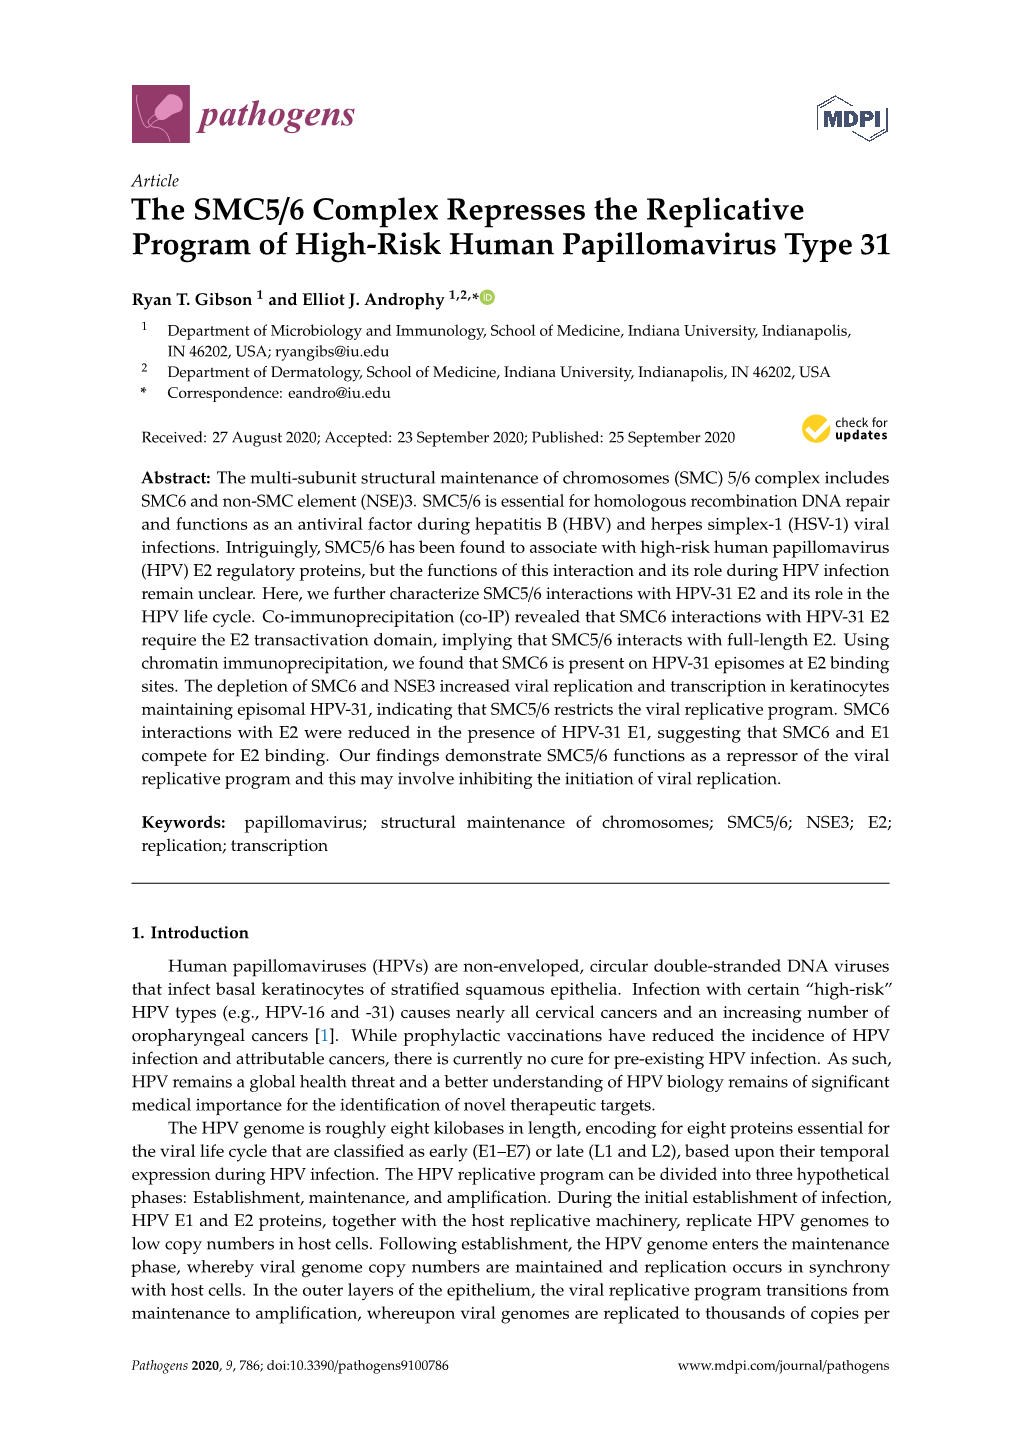 The SMC5/6 Complex Represses the Replicative Program of High-Risk Human Papillomavirus Type 31